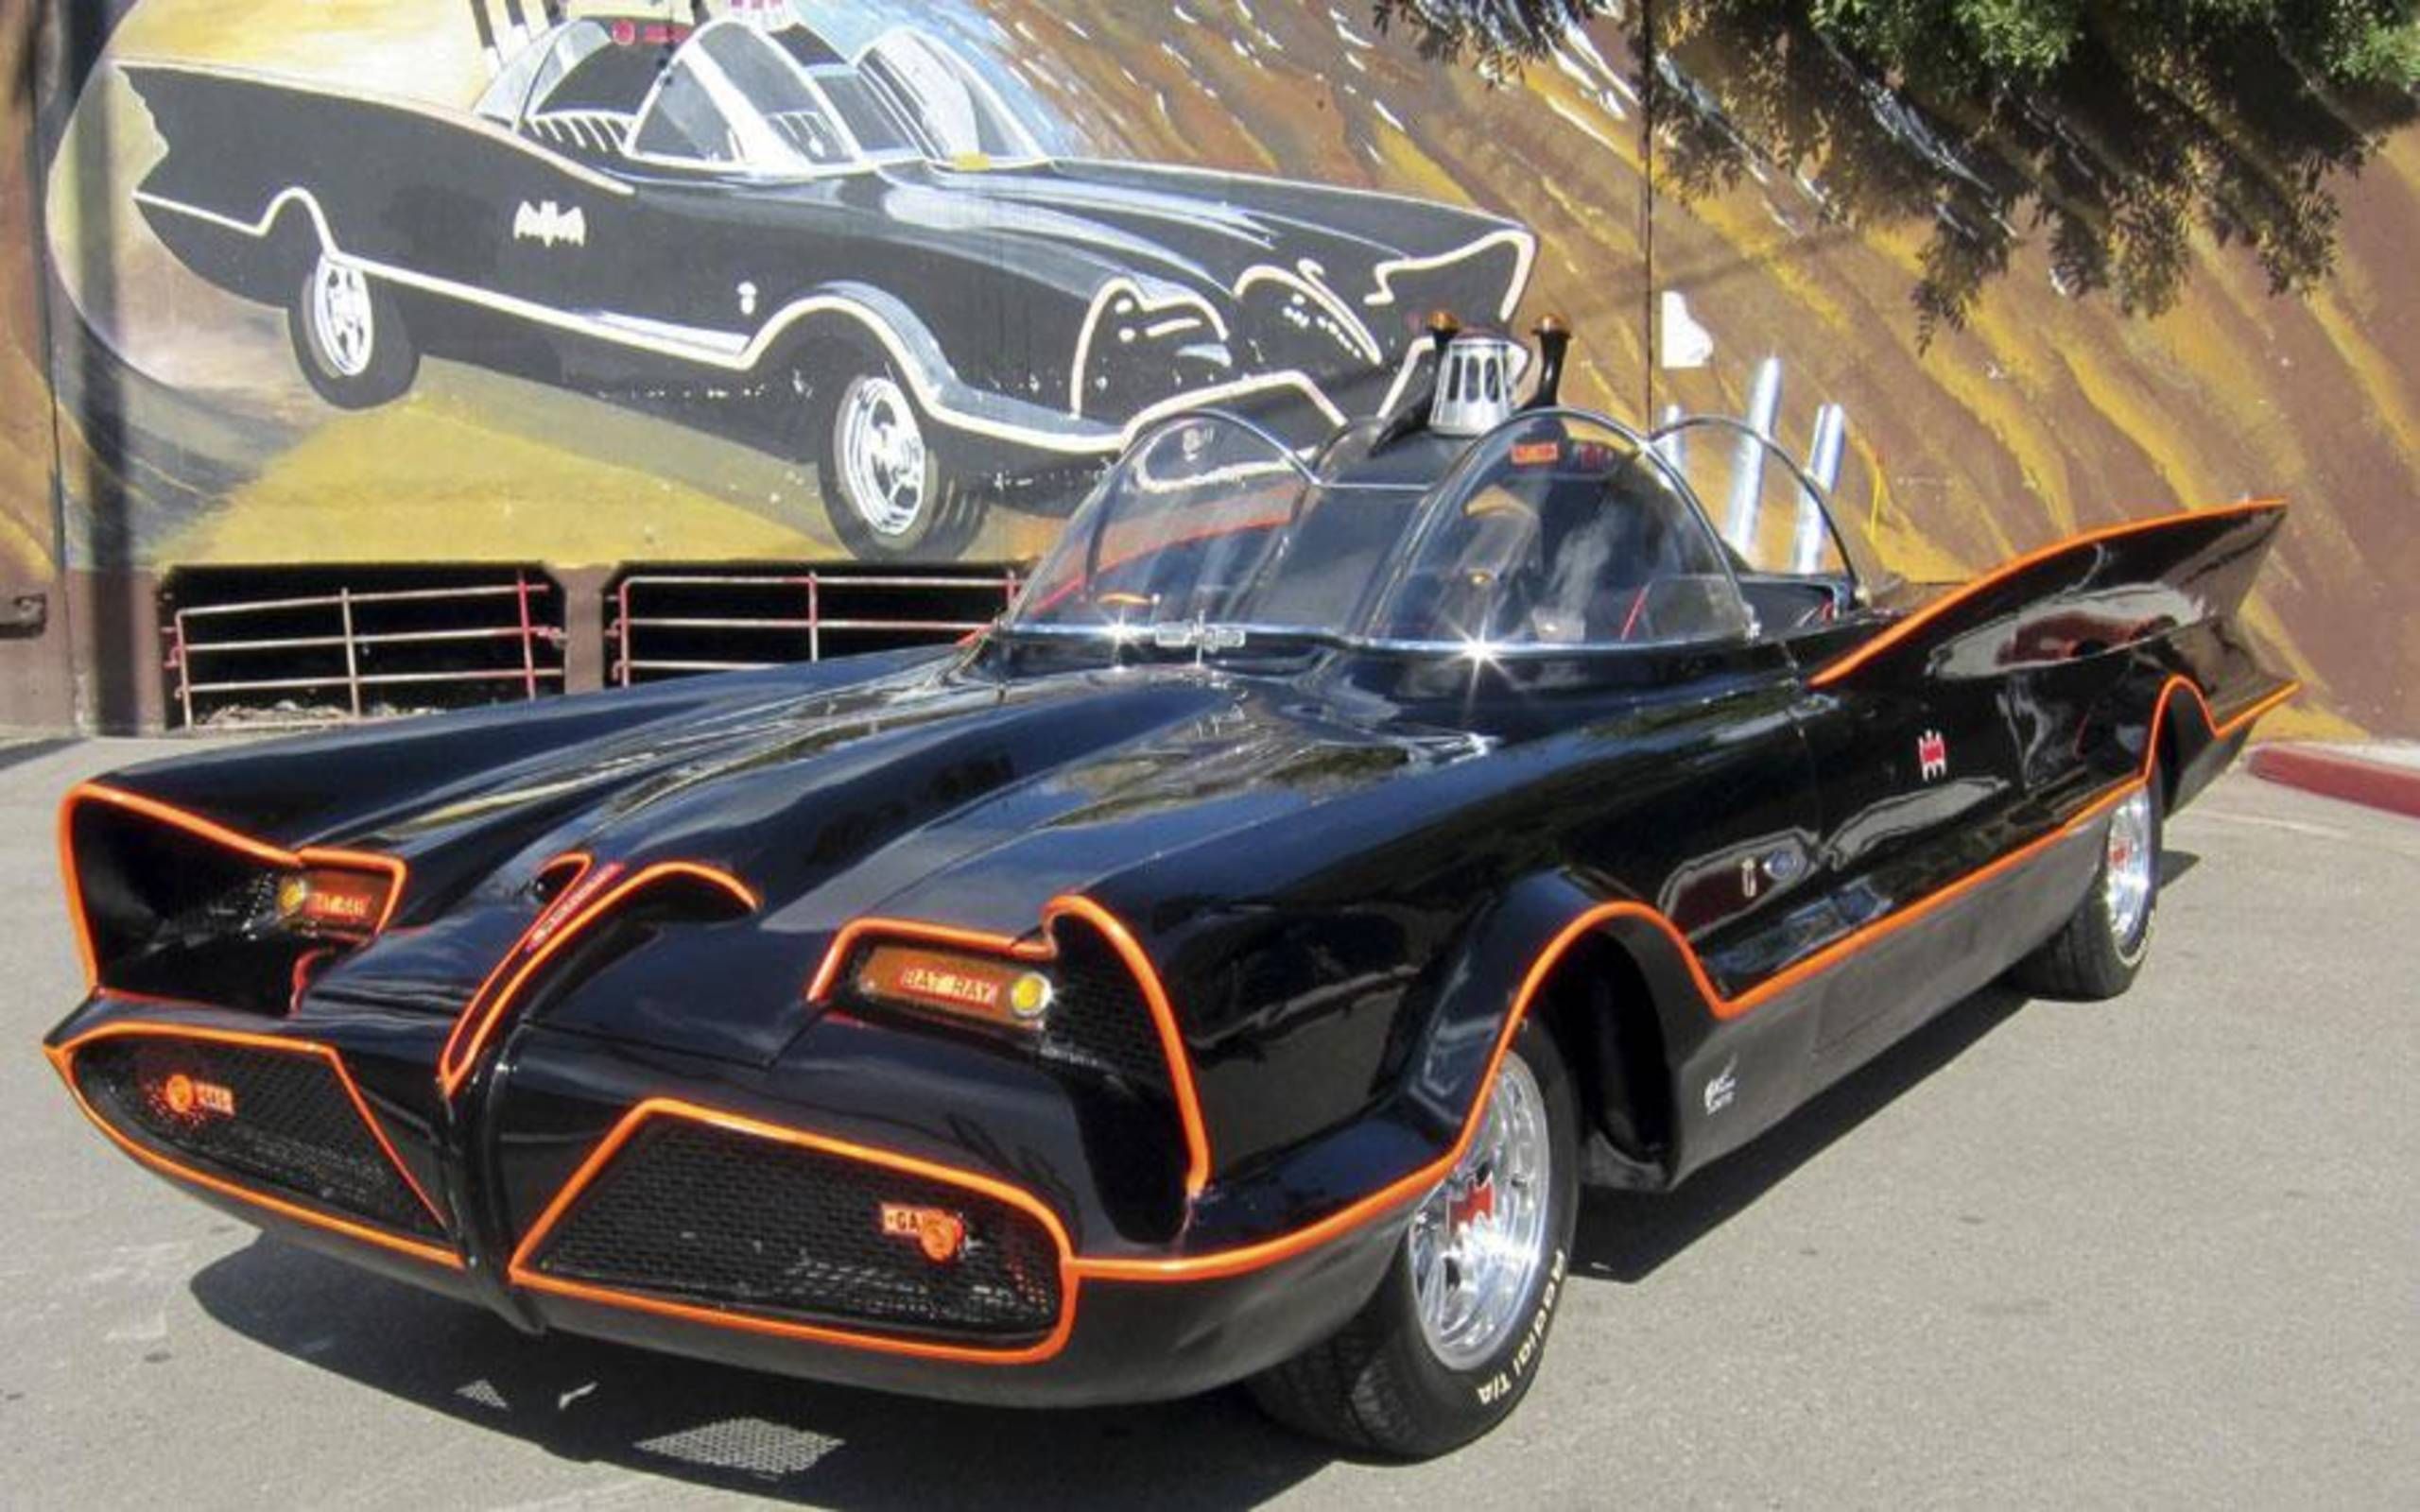 Original Batmobile sells for 4.6 million at BarrettJackson